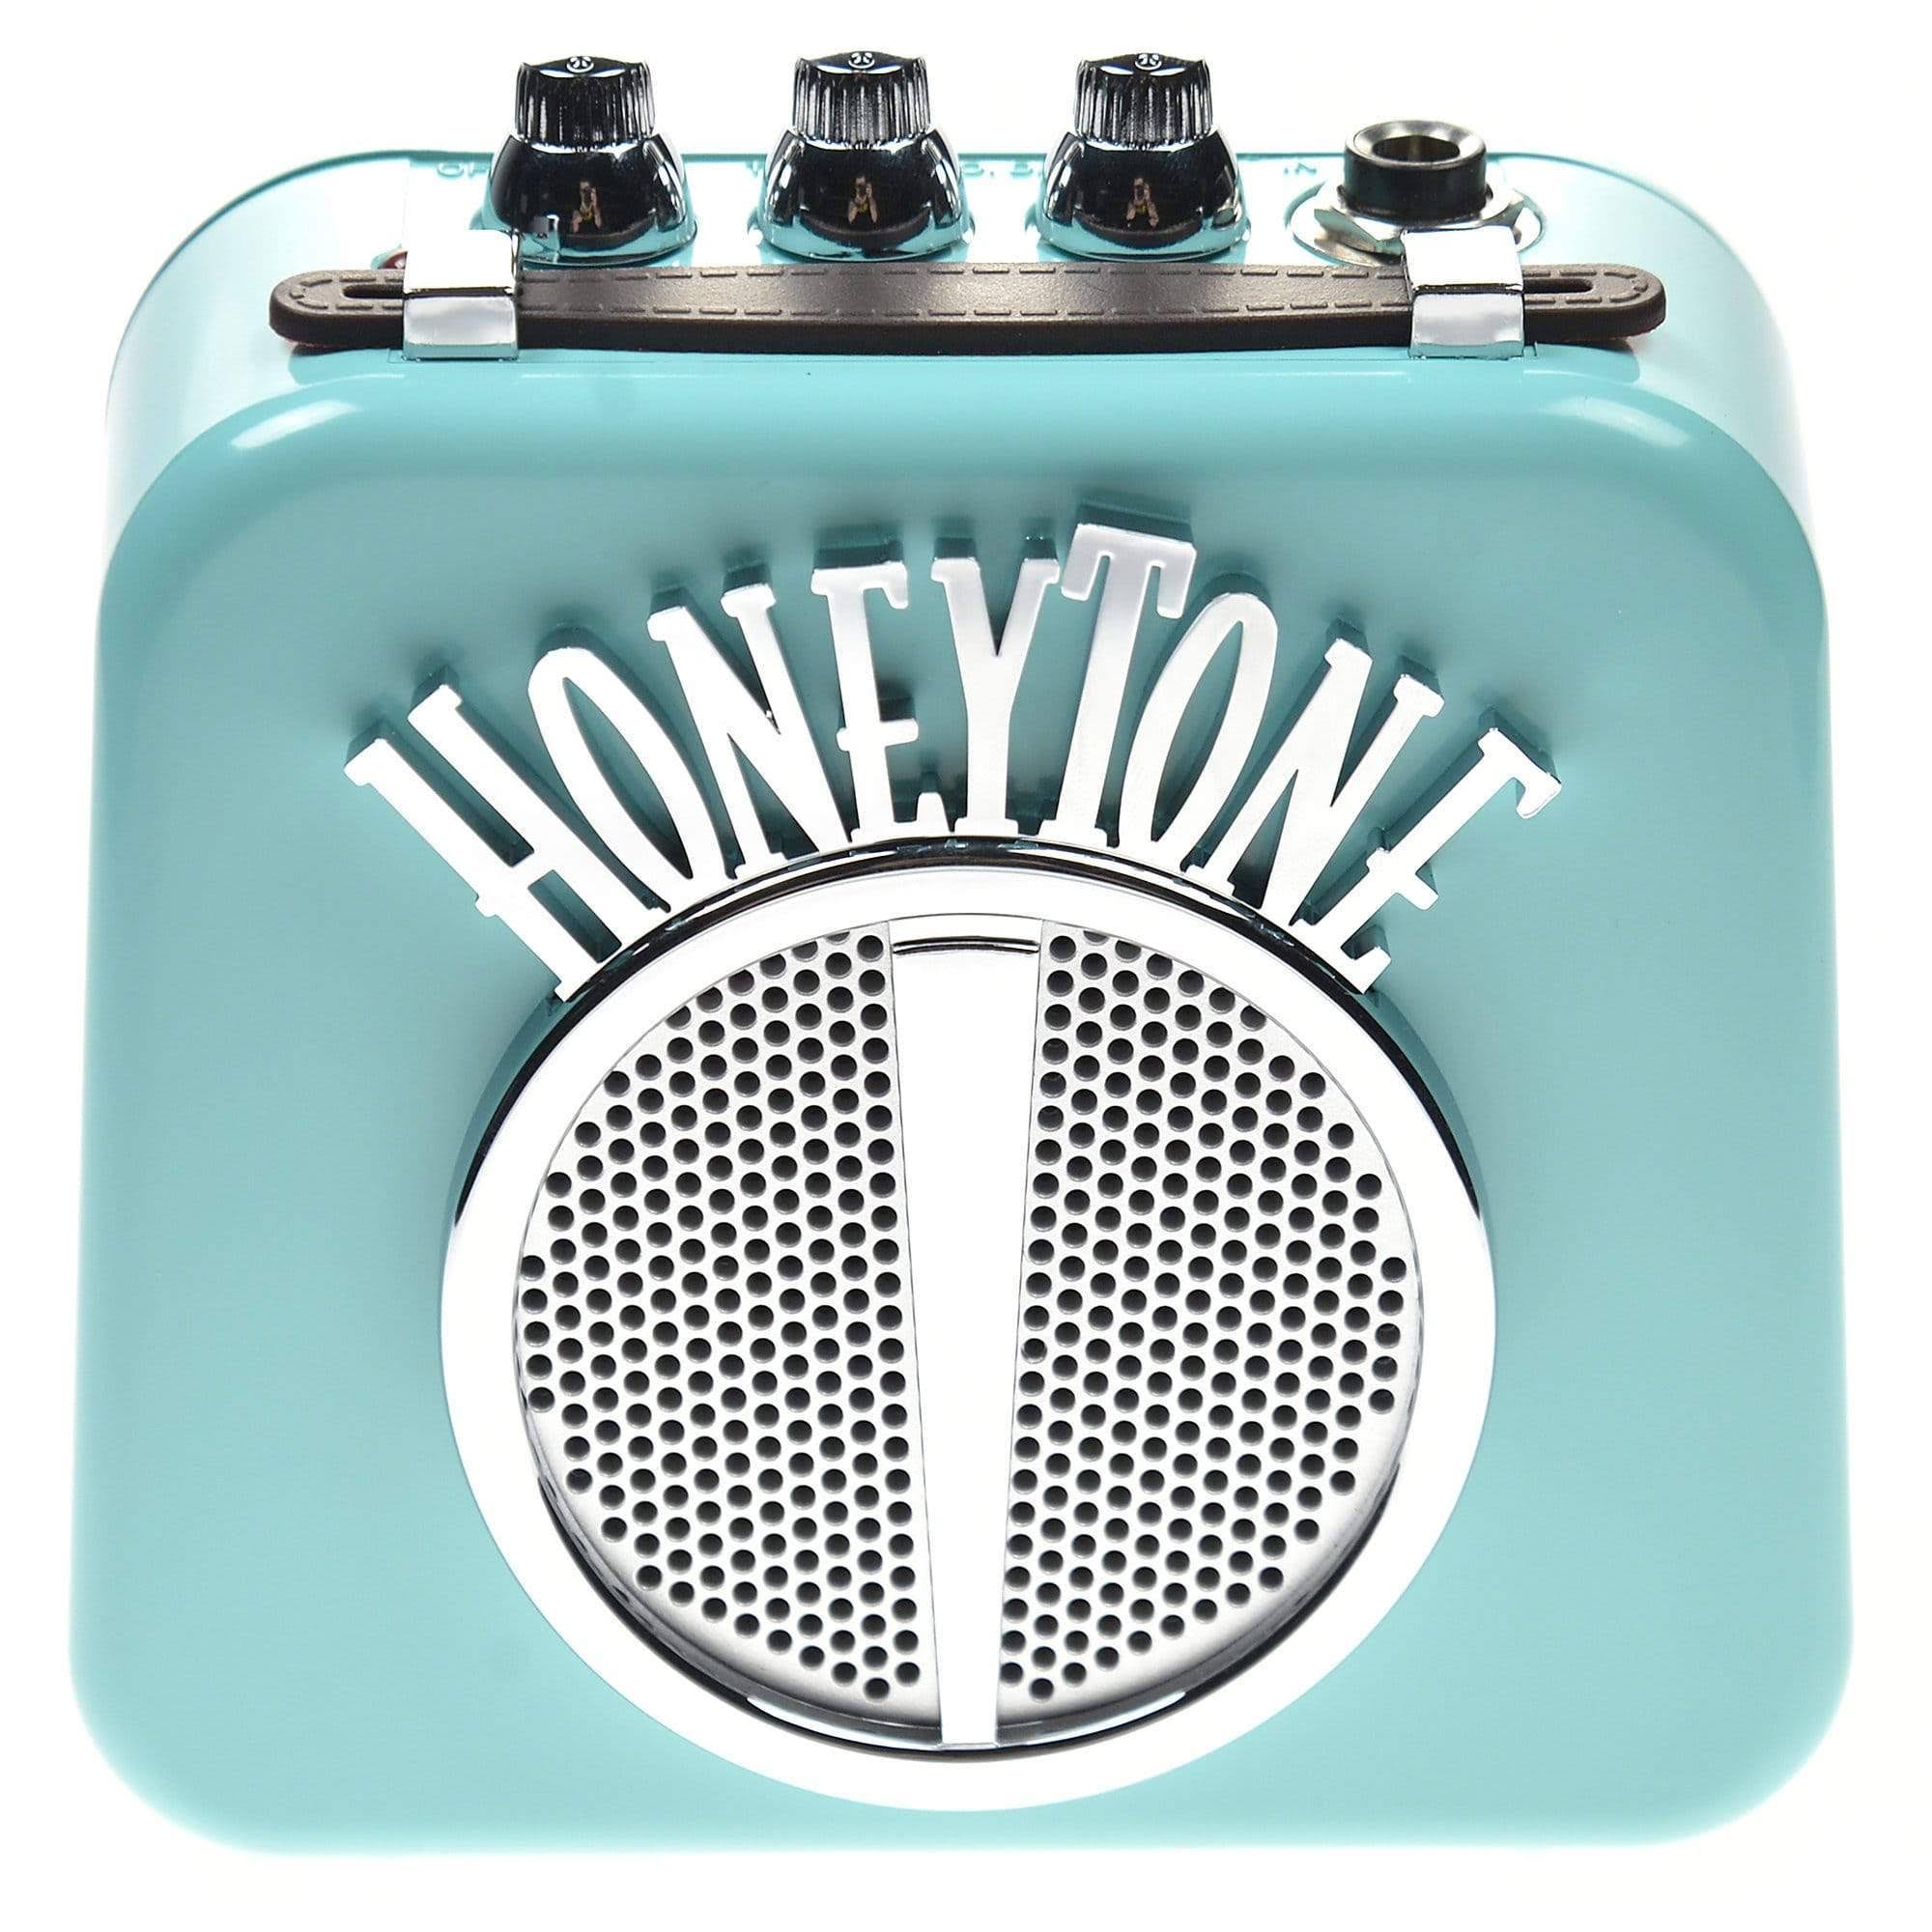 Danelectro N10a Honey Tone Mini Amp - Aqua